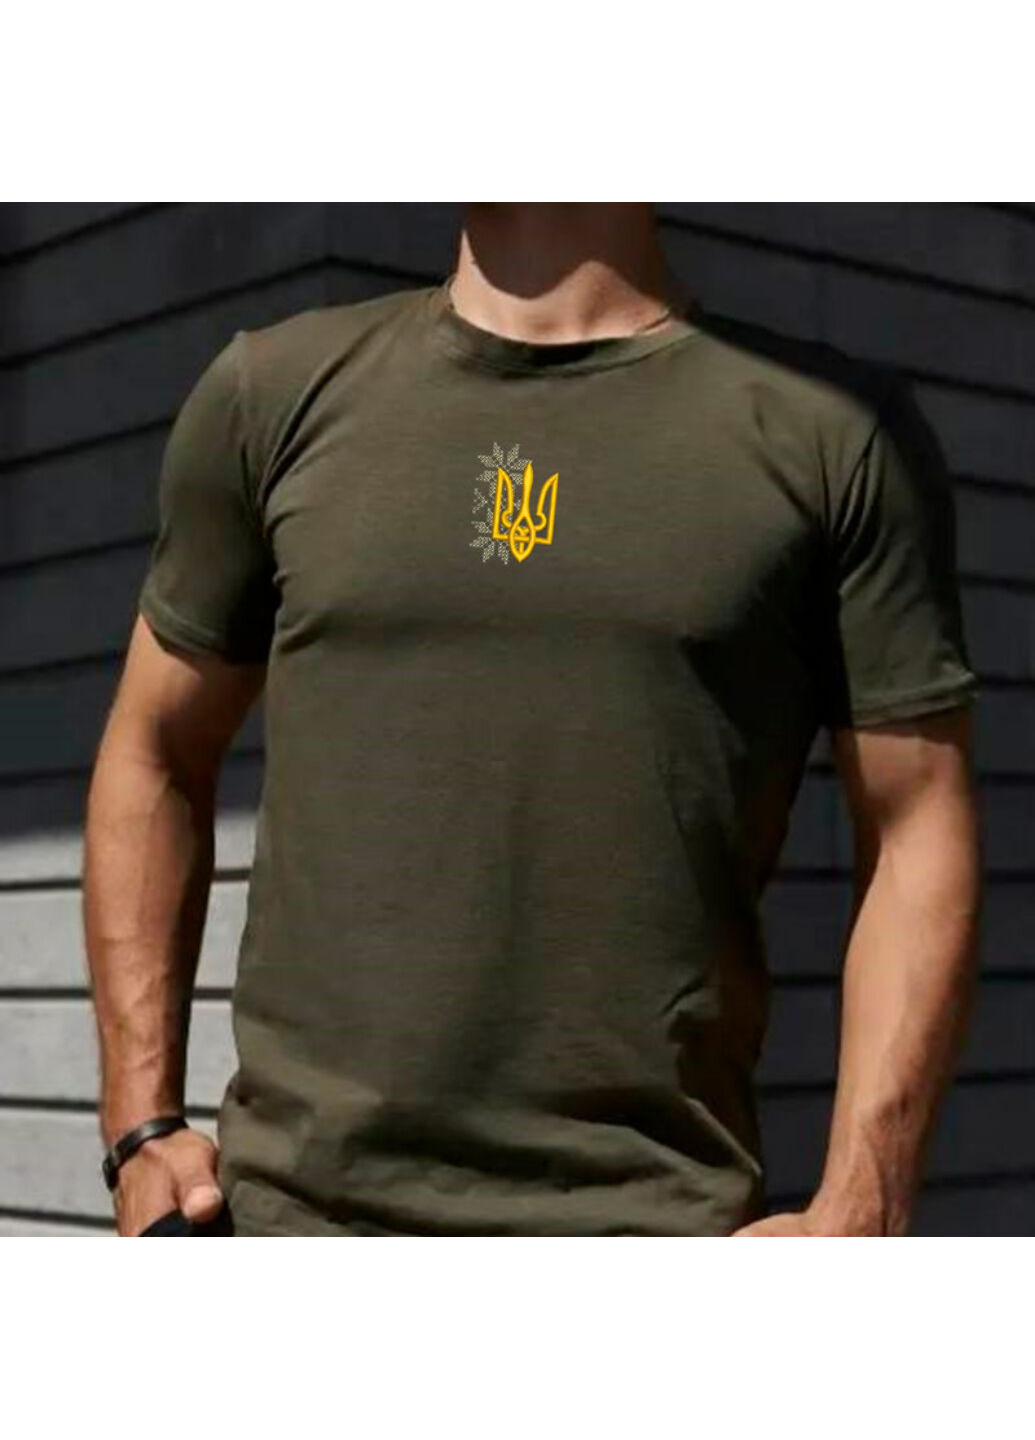 Хаки (оливковая) футболка з вишивкою тризуба 01-1 мужская хаки 2xl No Brand